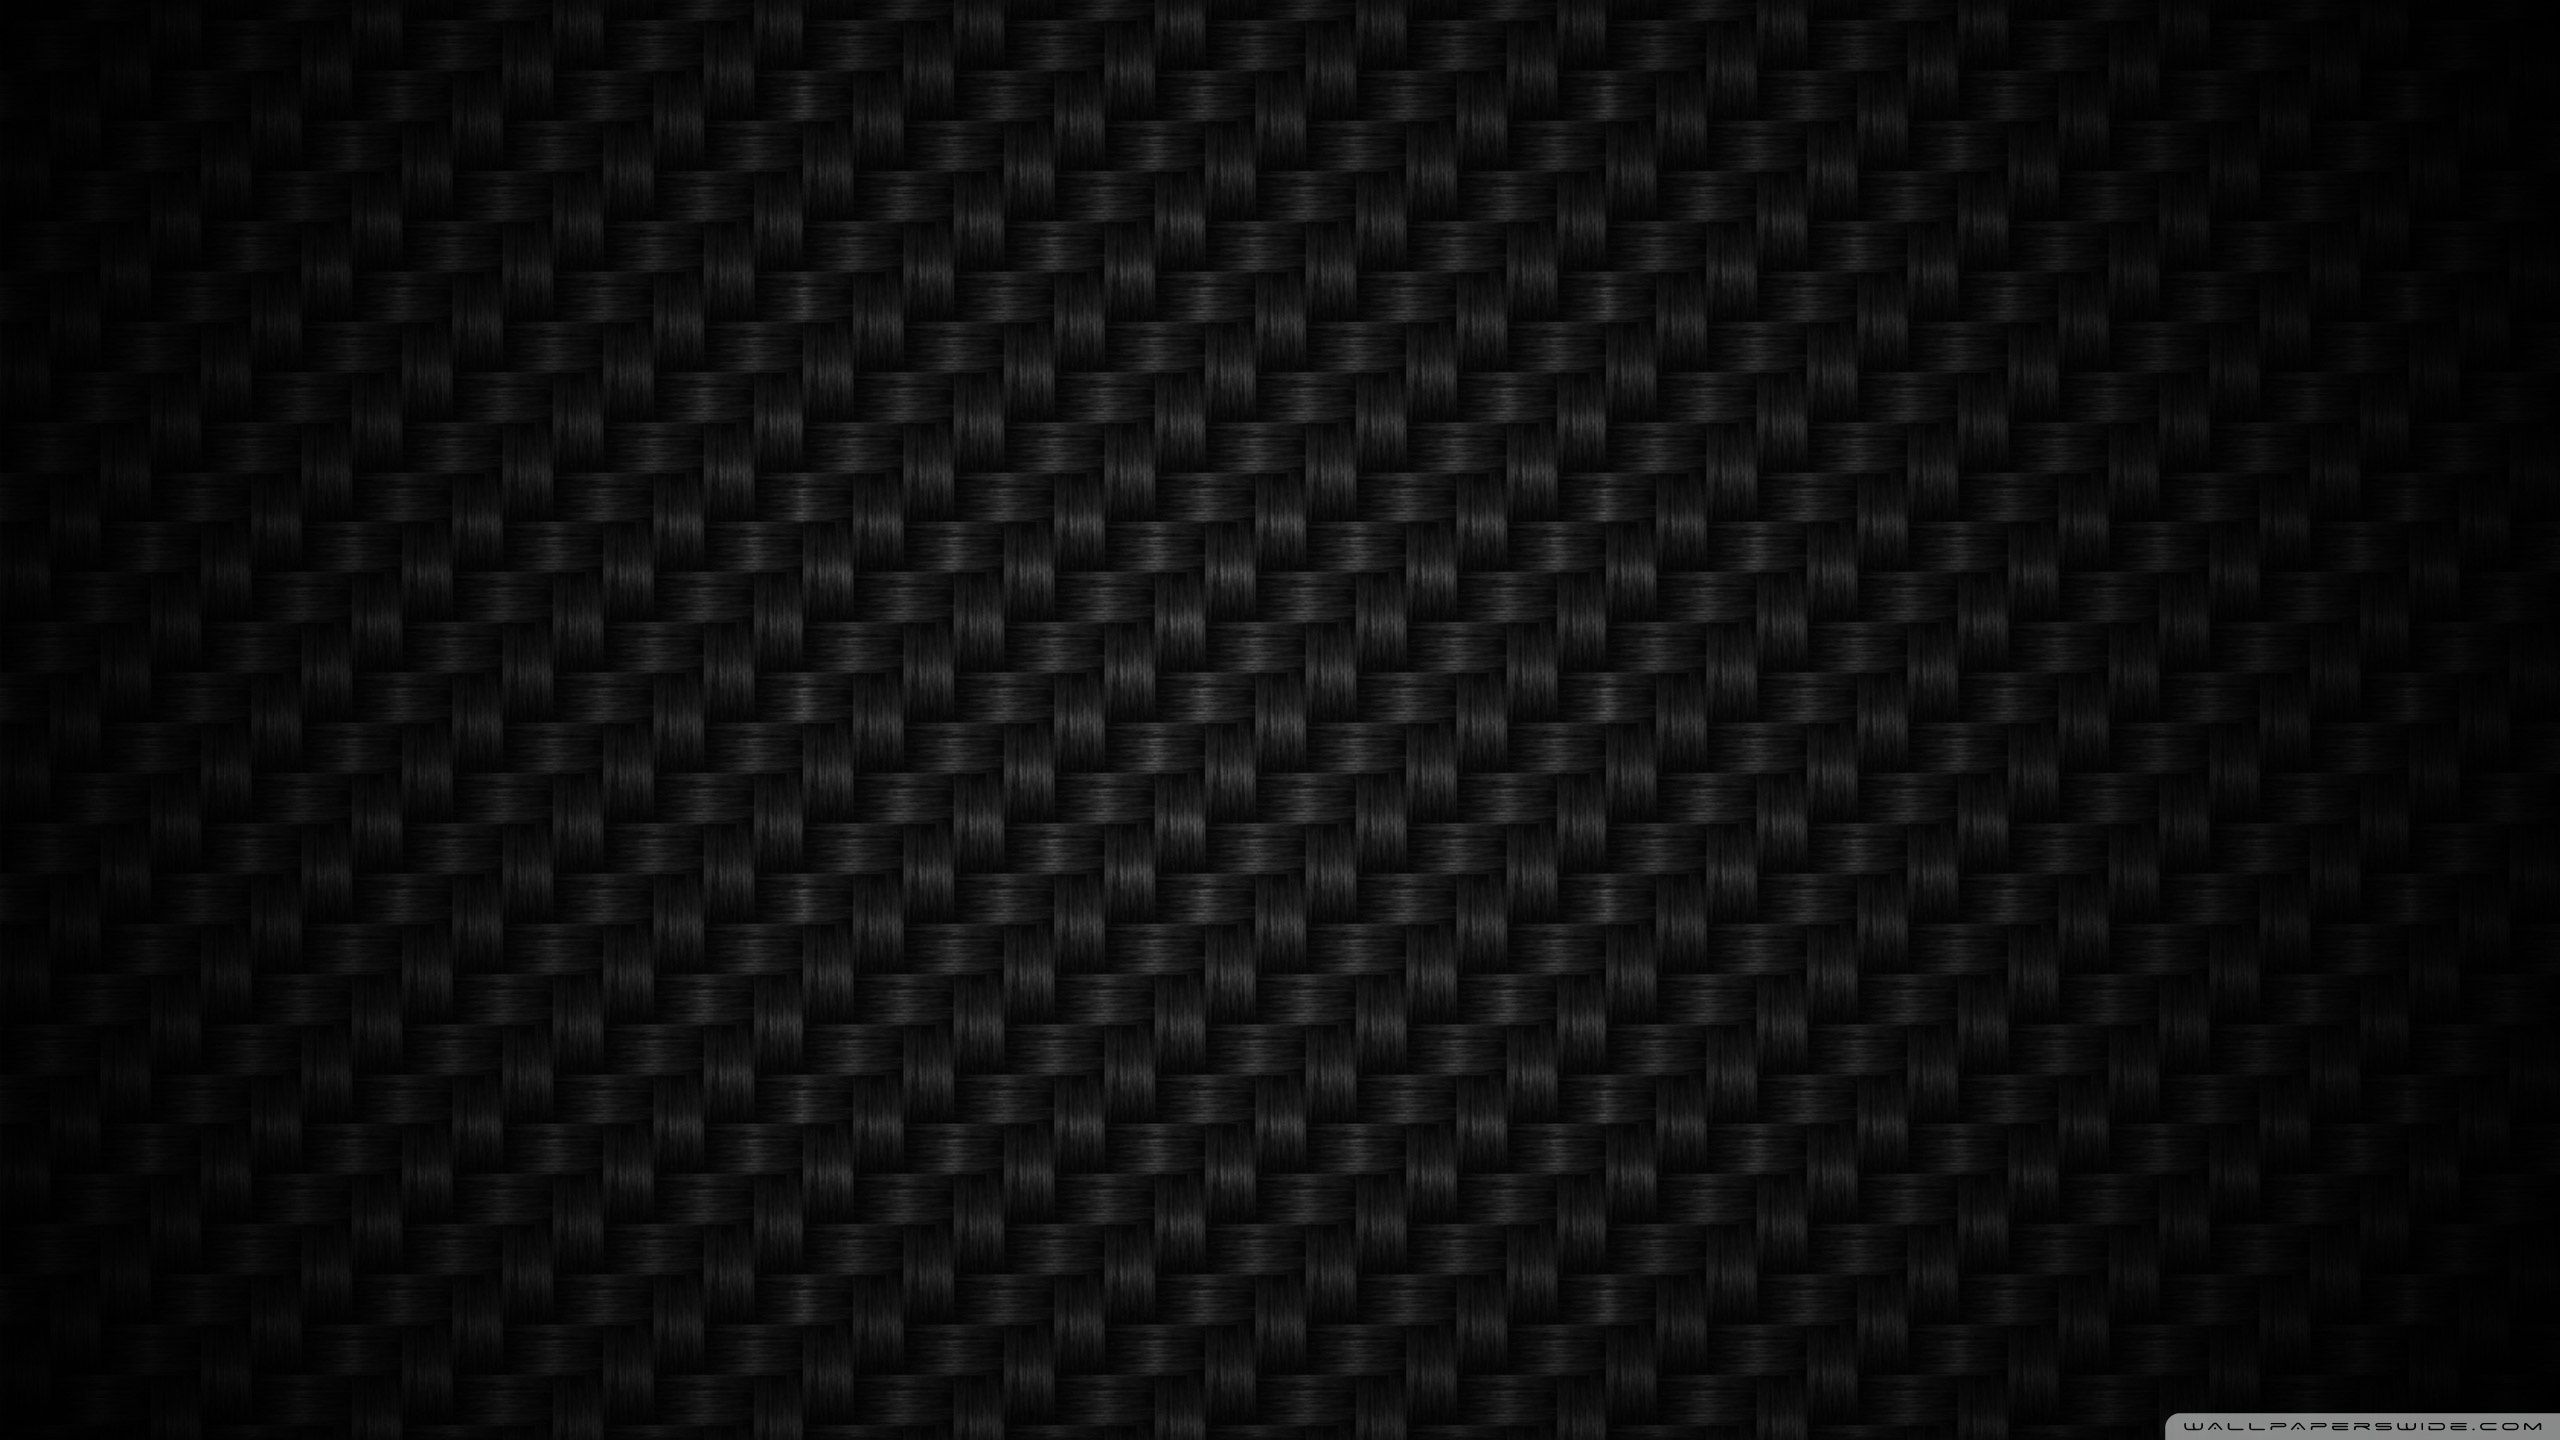 2560x1440 Black Wallpapers On Wallpaperdog